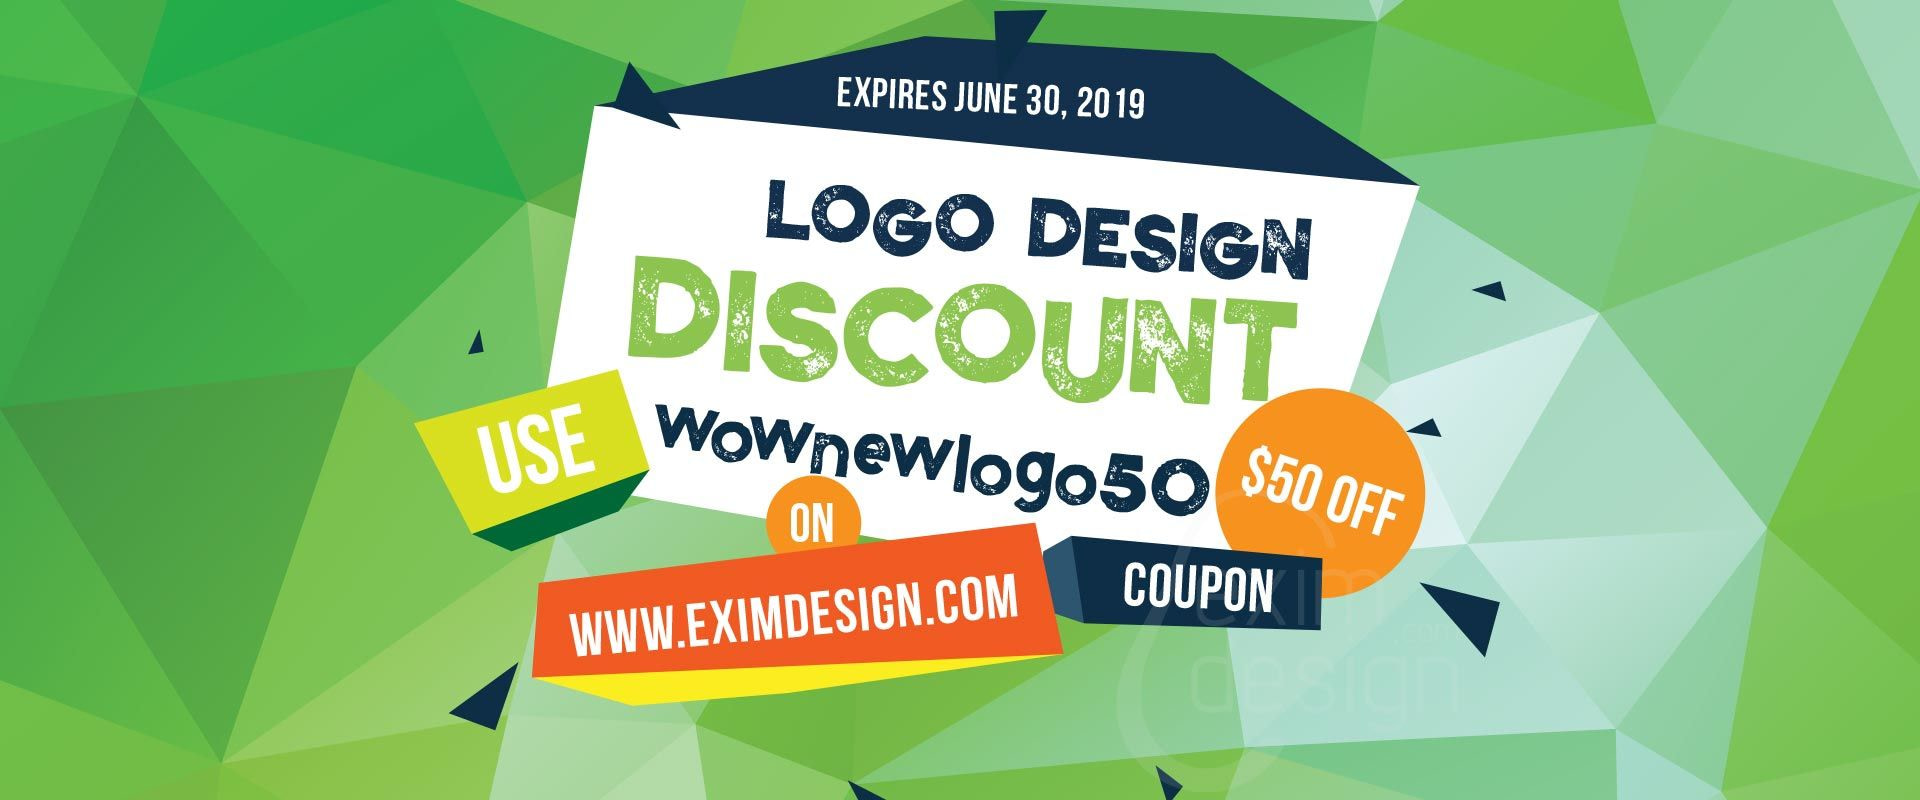 Discount for logo design